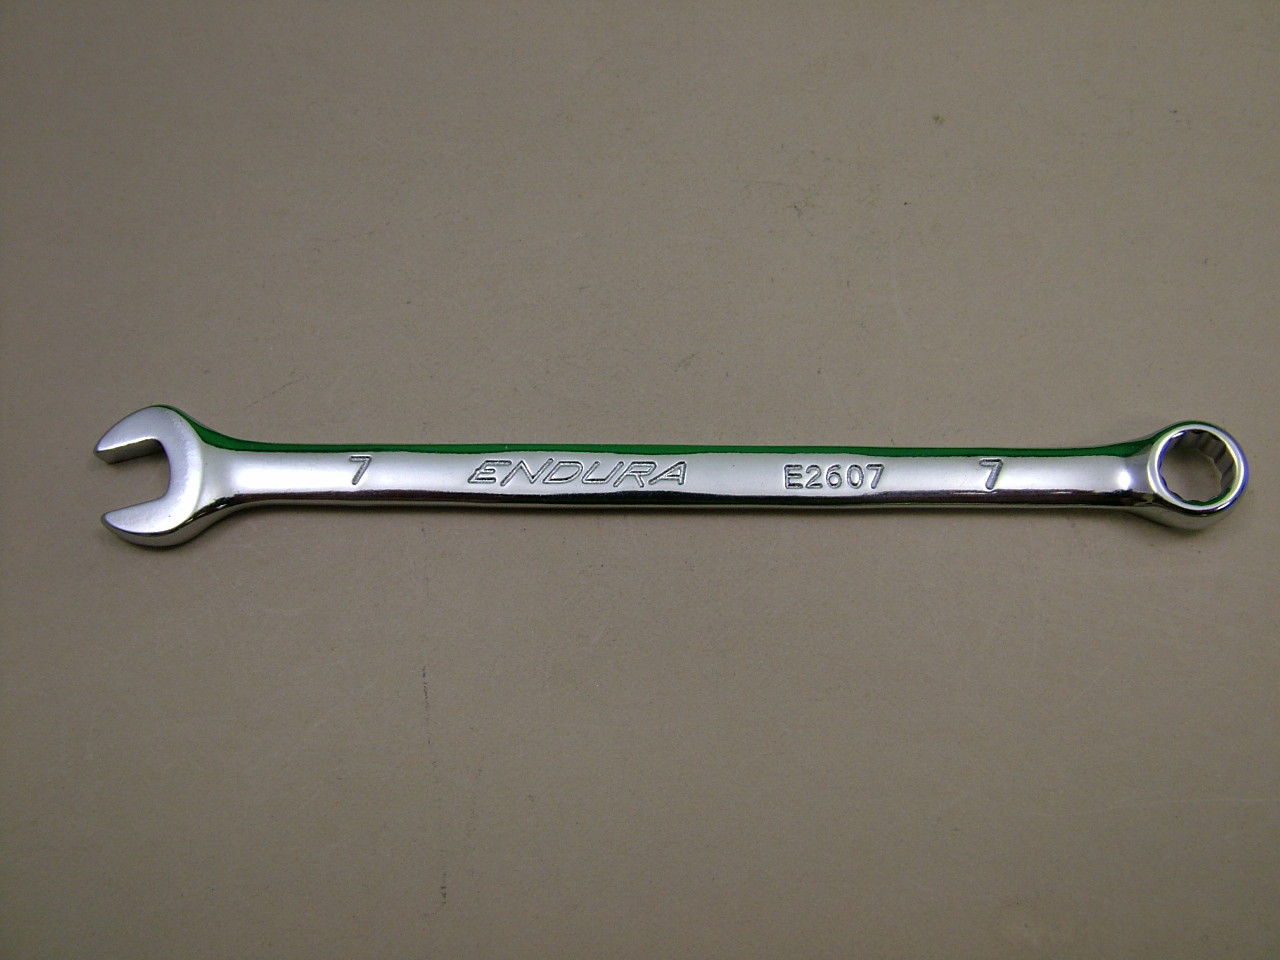 Combination spanner 6mm chrome vanadium steel, Endura brand, 6mm - Click Image to Close